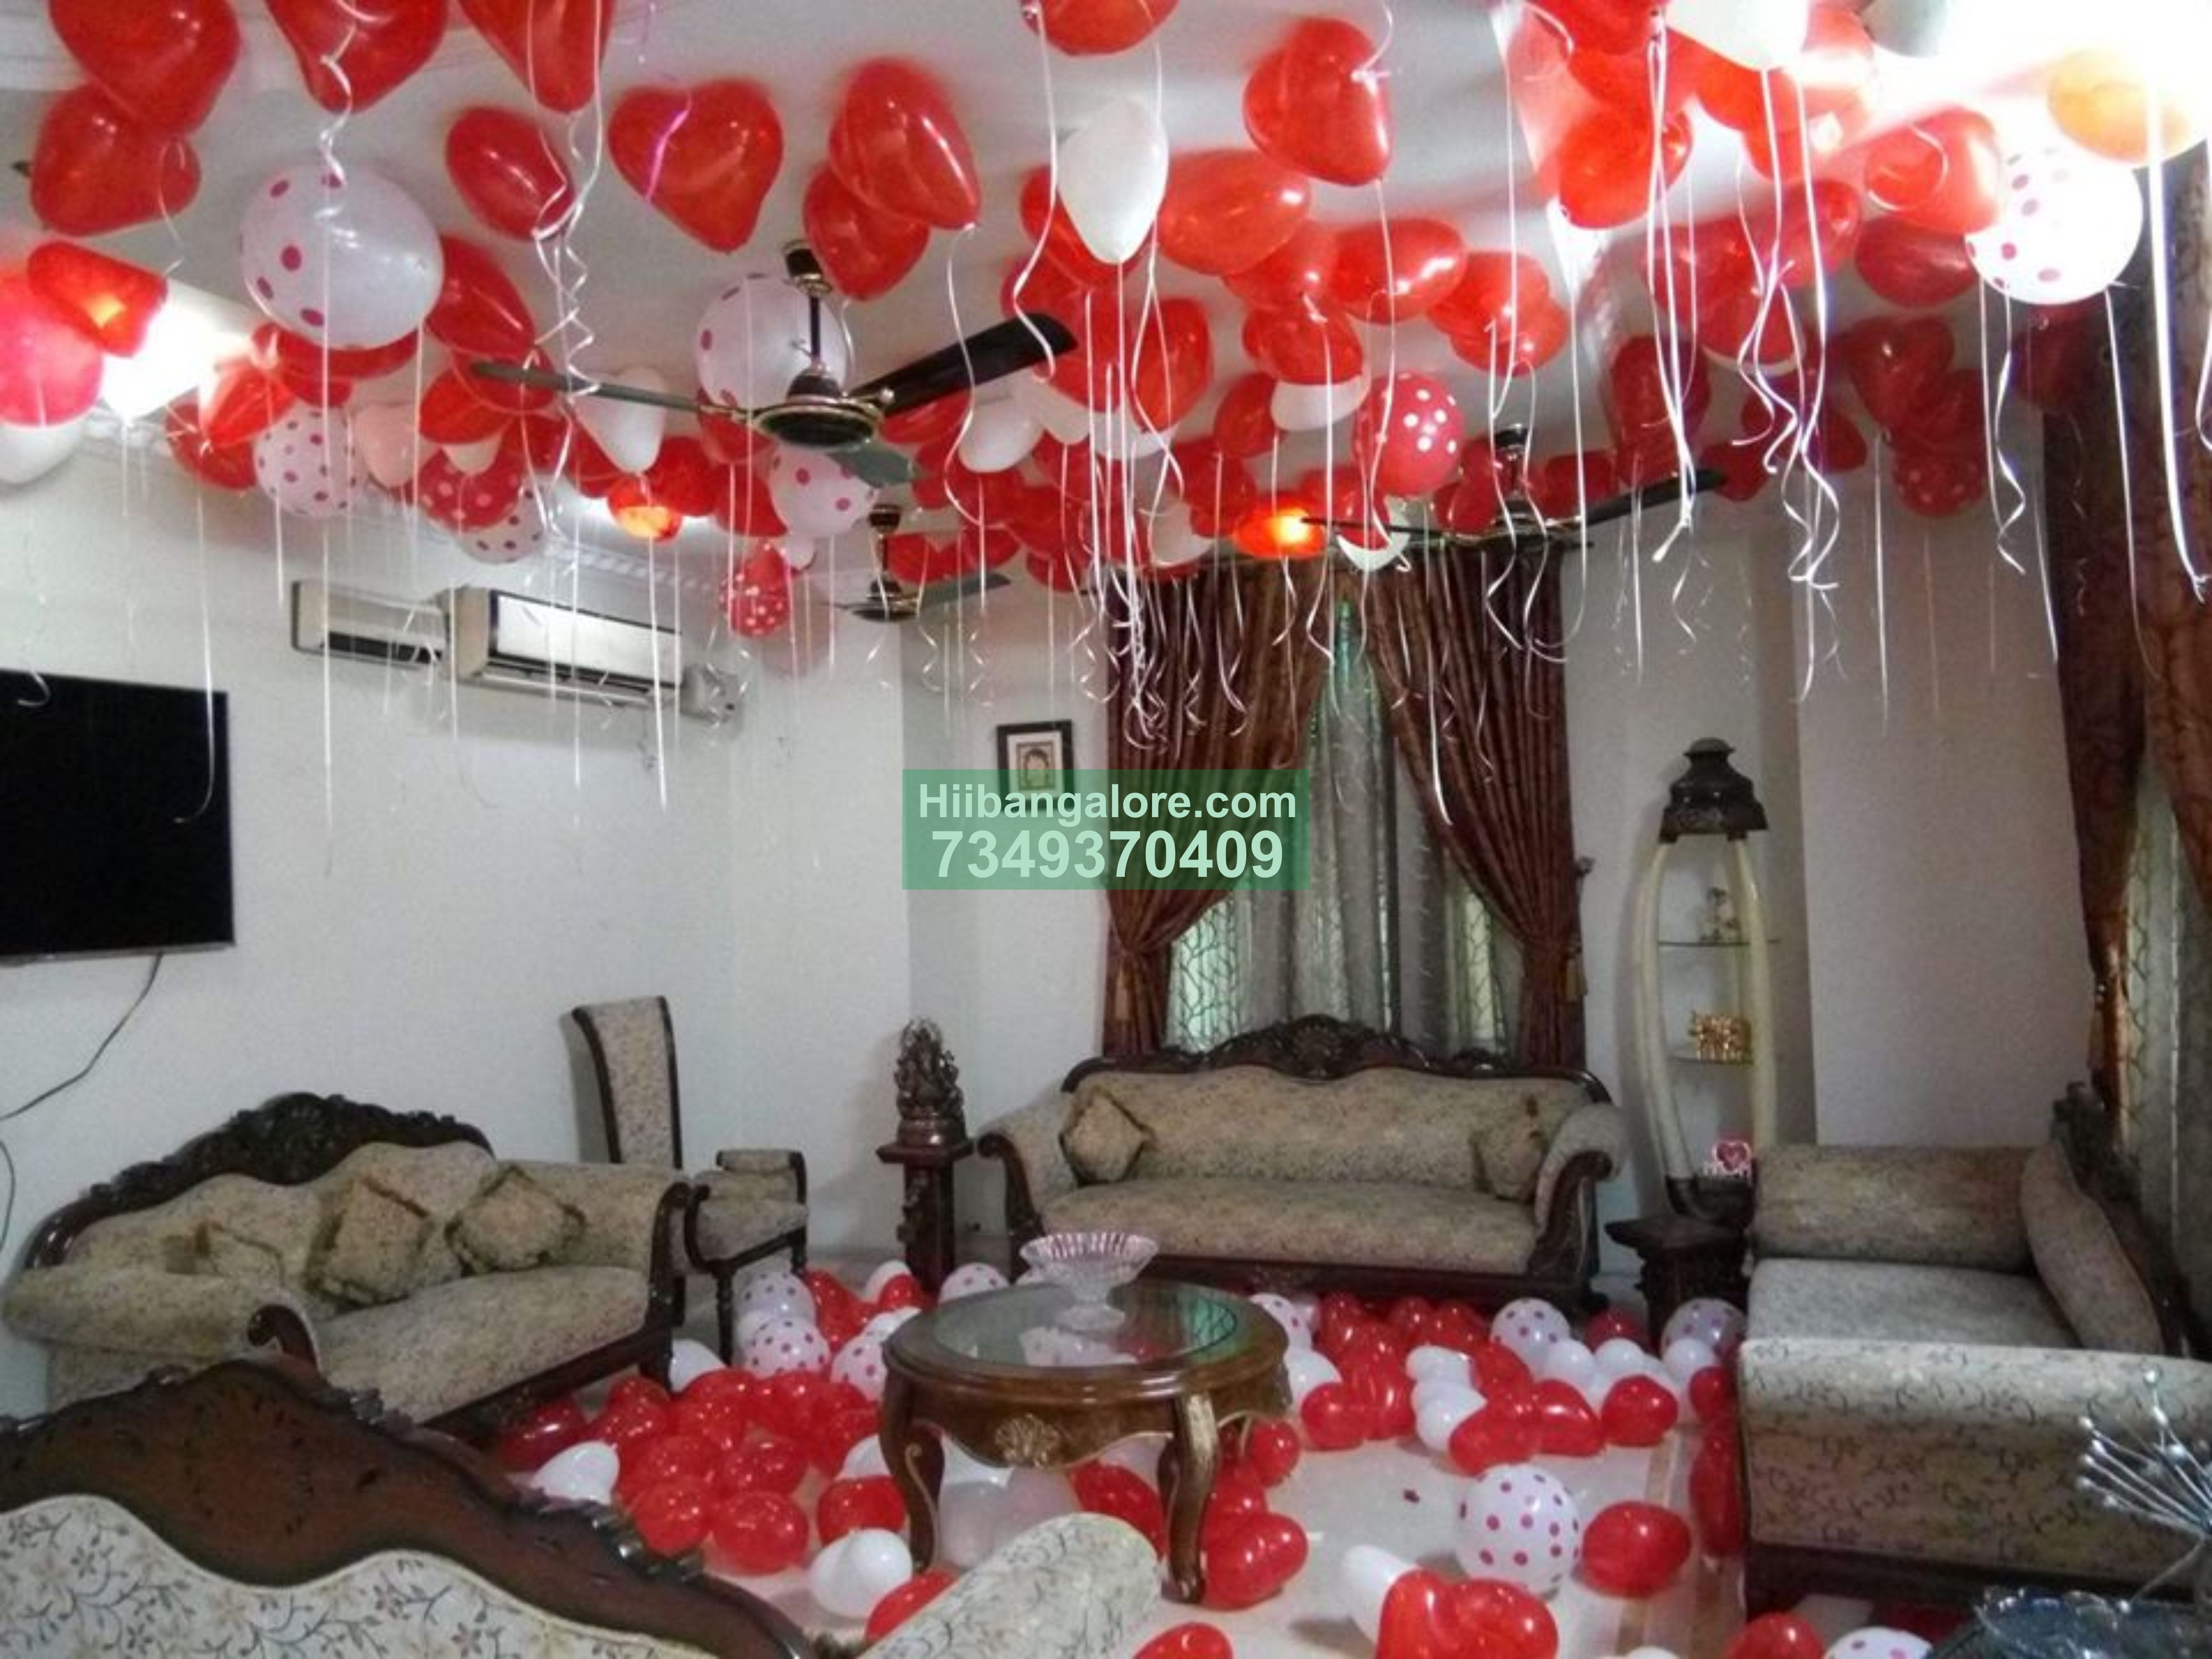 surprise heart shape balloon decoration at home Bangalore